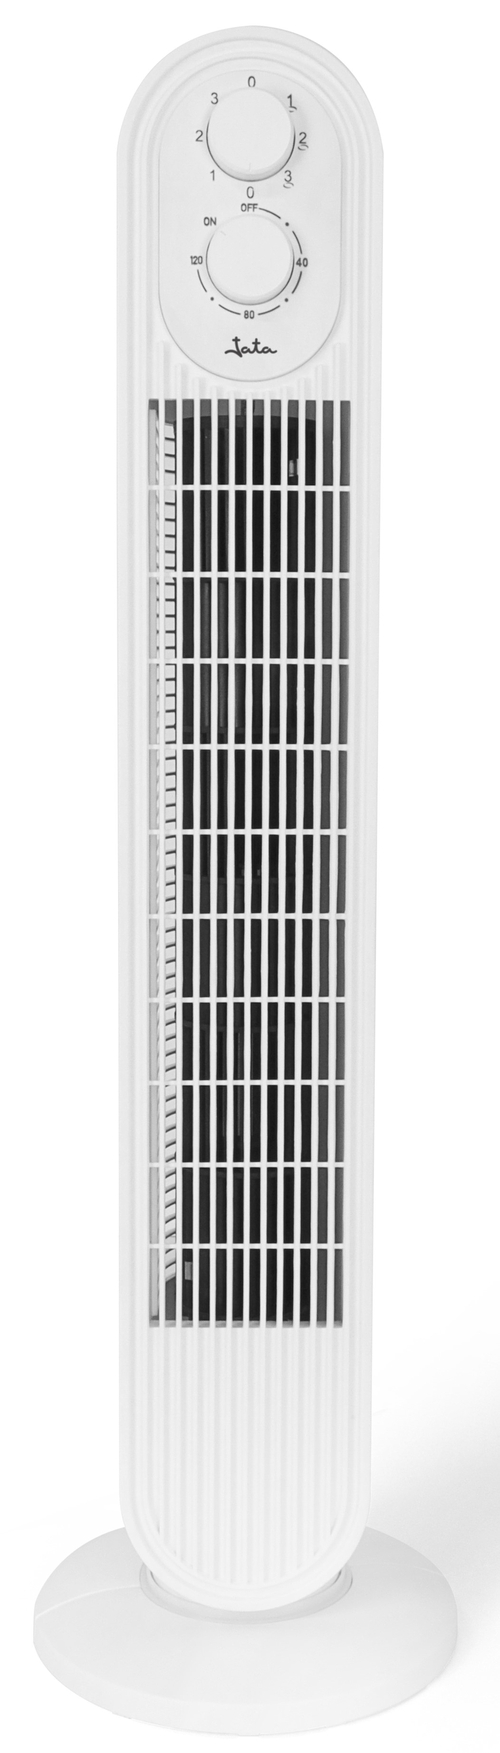 JATA JVVT-3043 Blanco - Ventilador de Torre 78.5CM